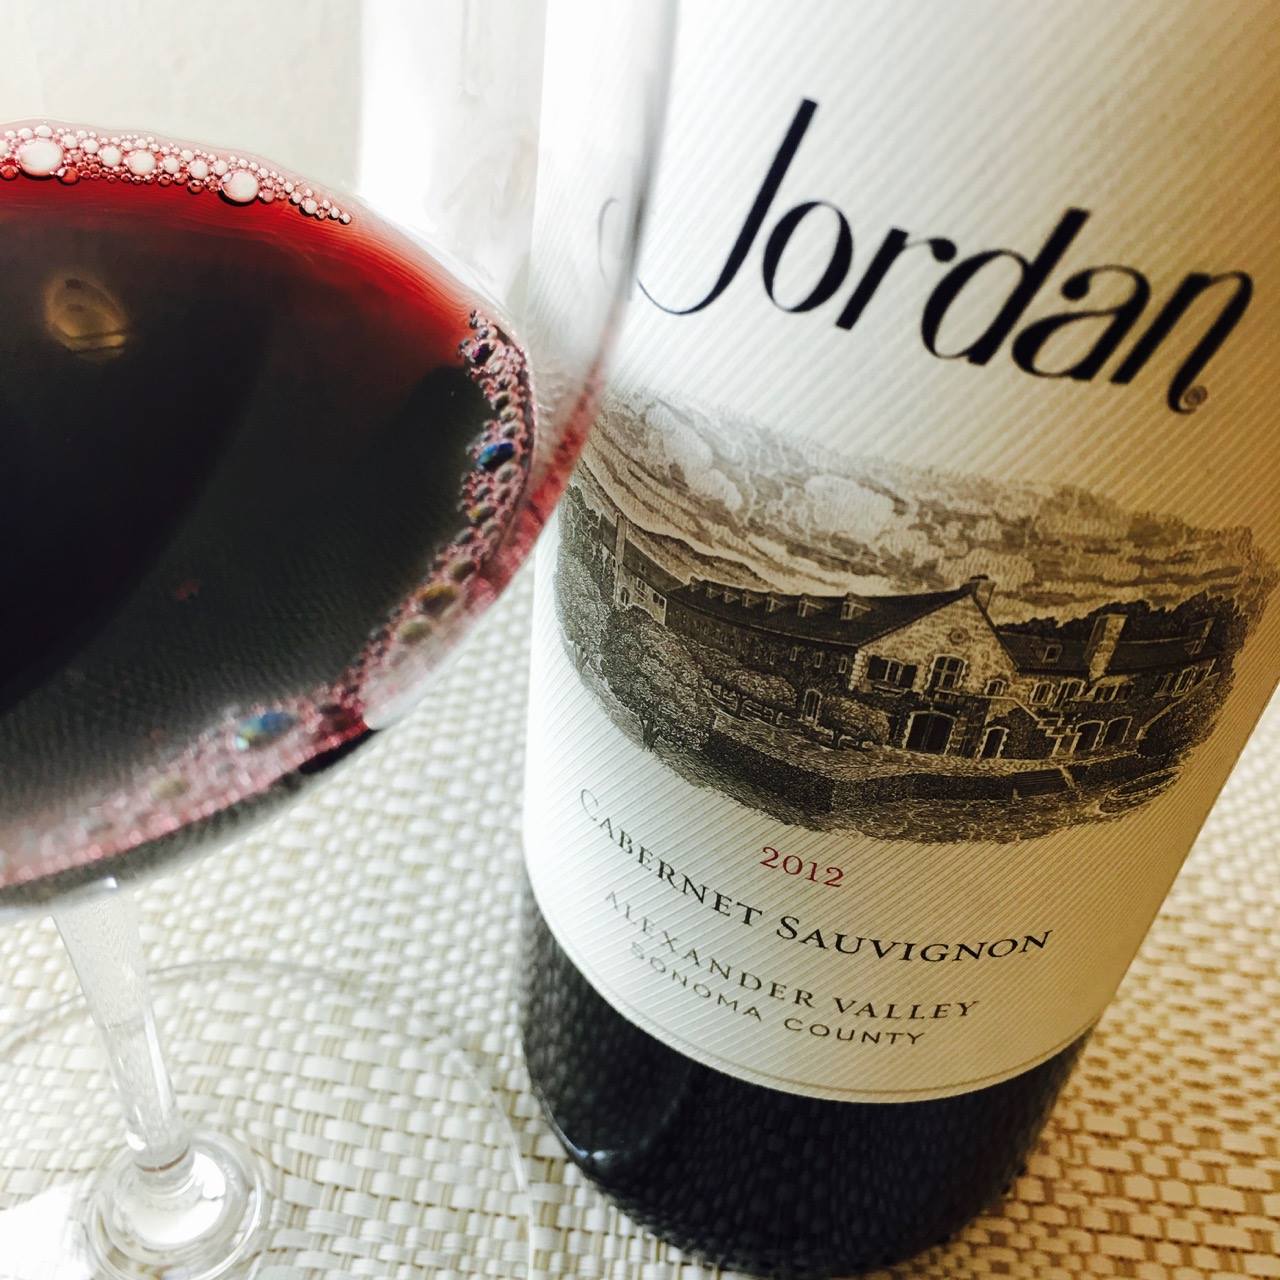 2012 Jordan Vineyard and Winery Cabernet Sauvignon Alexander Valley, Sonoma County